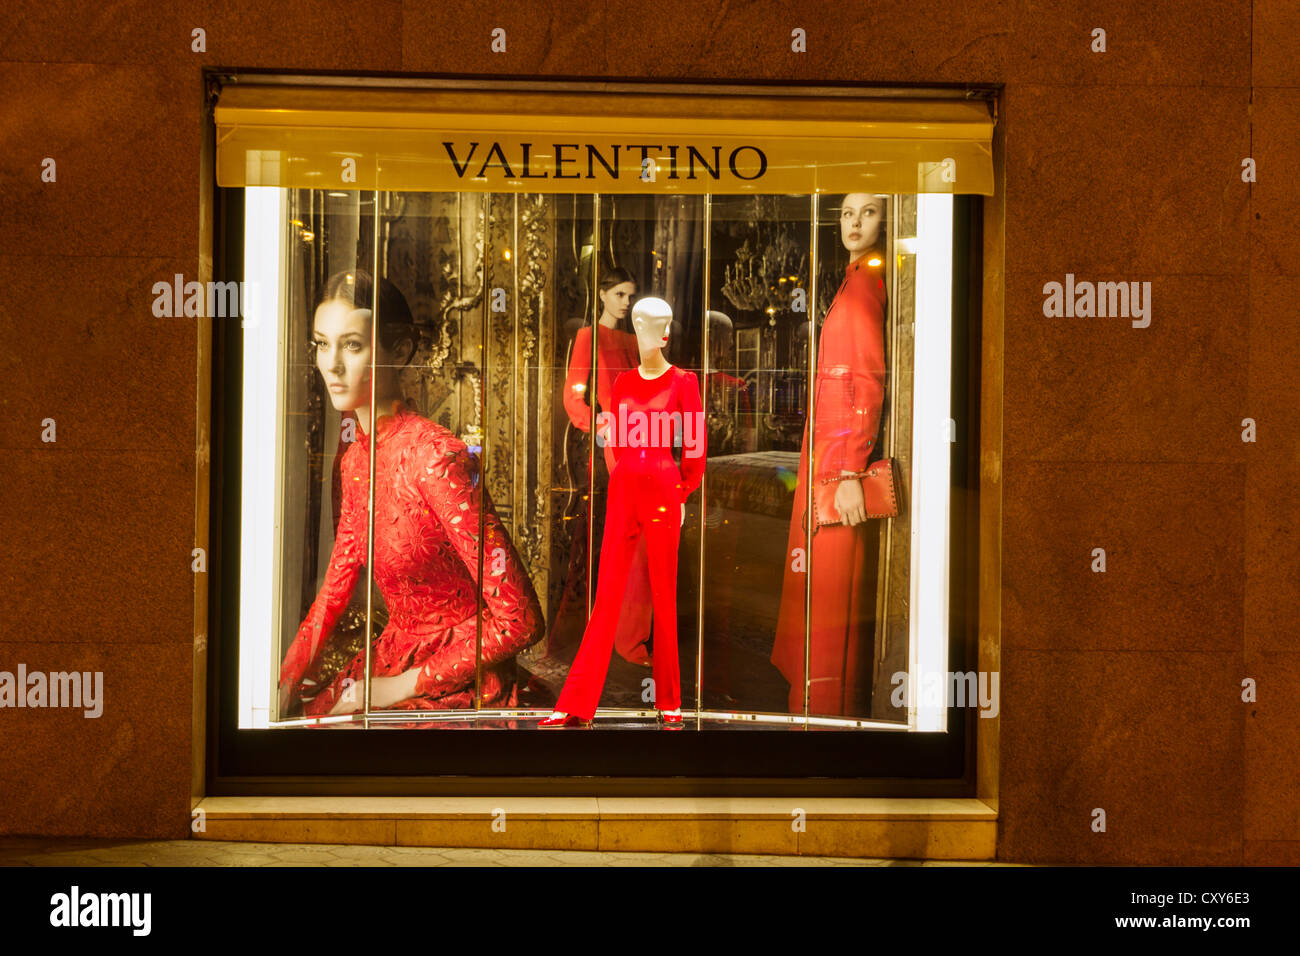 Valentino store in Barcelona, Spain Stock Photo - Alamy